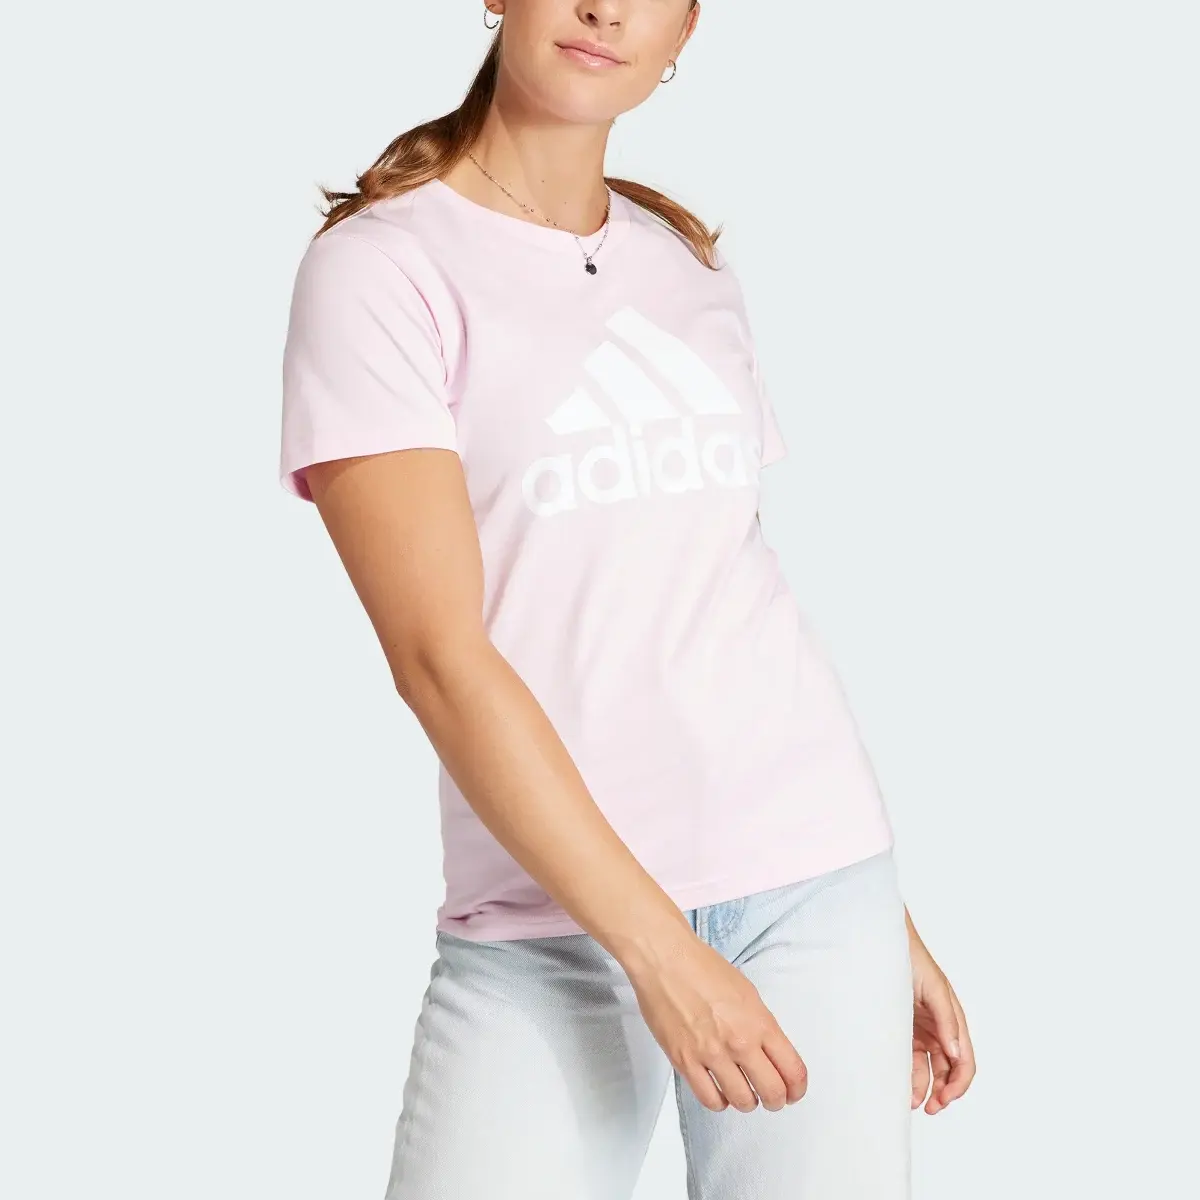 Adidas T-shirt LOUNGEWEAR Essentials. 1